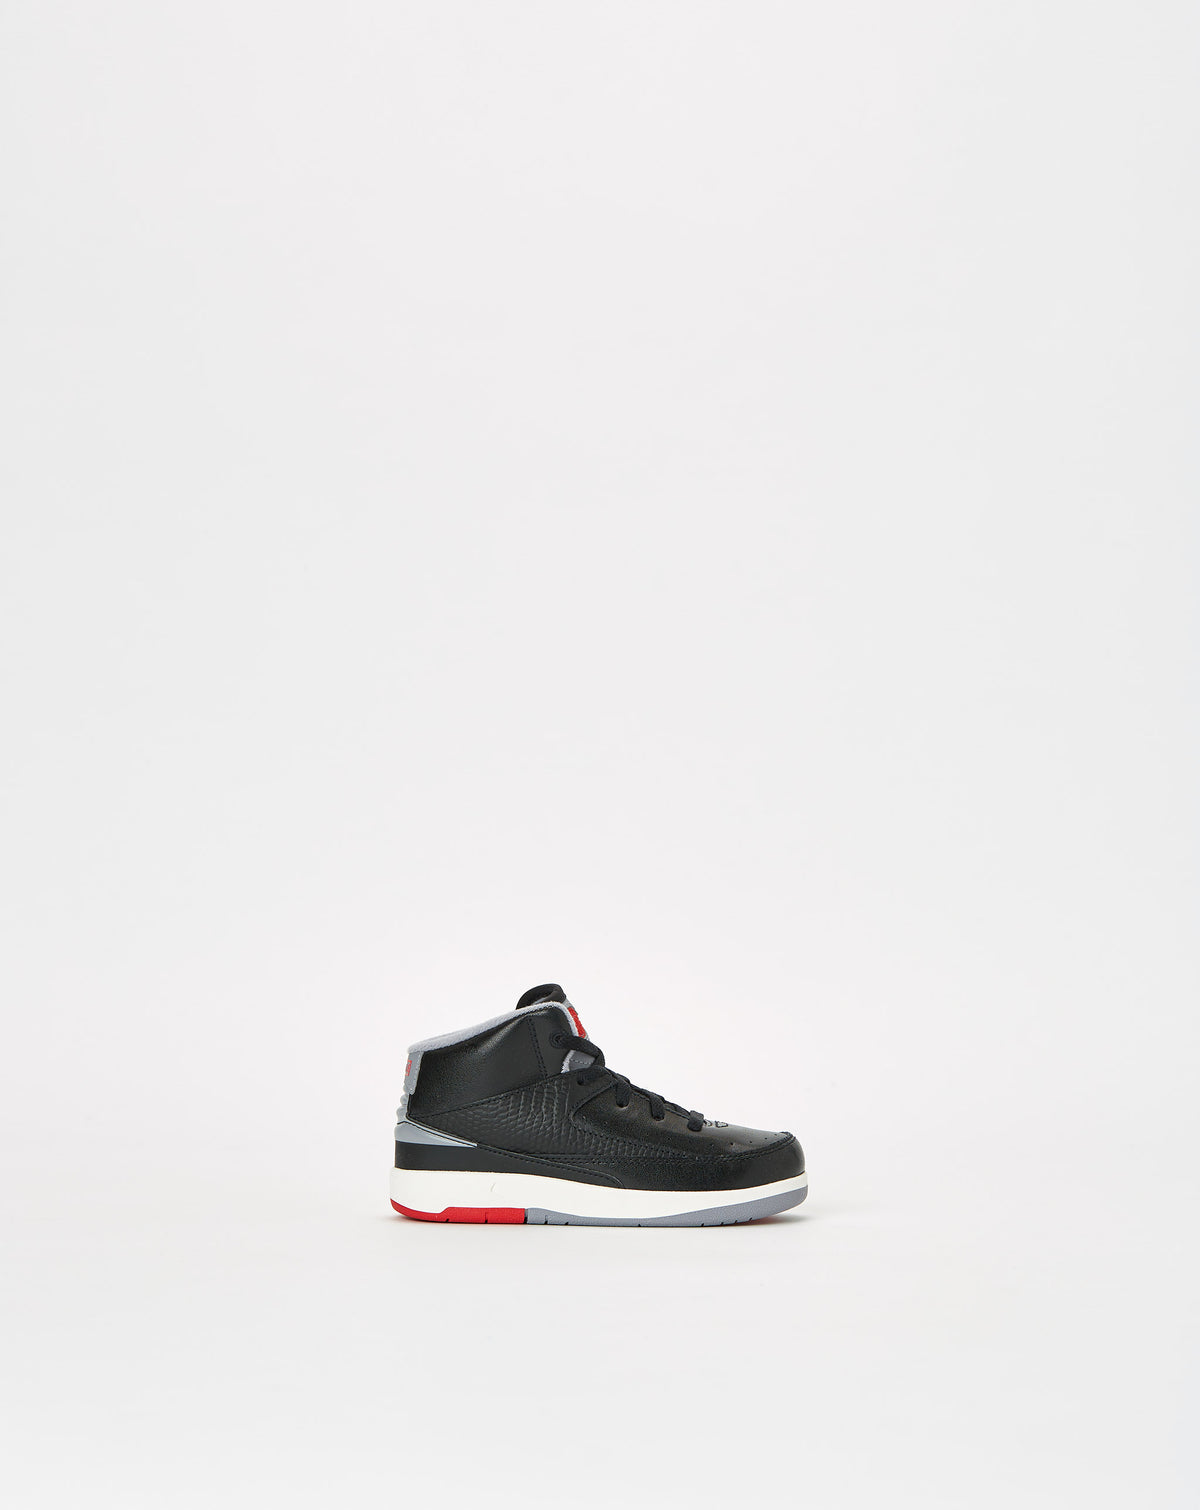 Air Jordan Kids' Air Jordan 2 Retro (TD) - Rule of Next Footwear